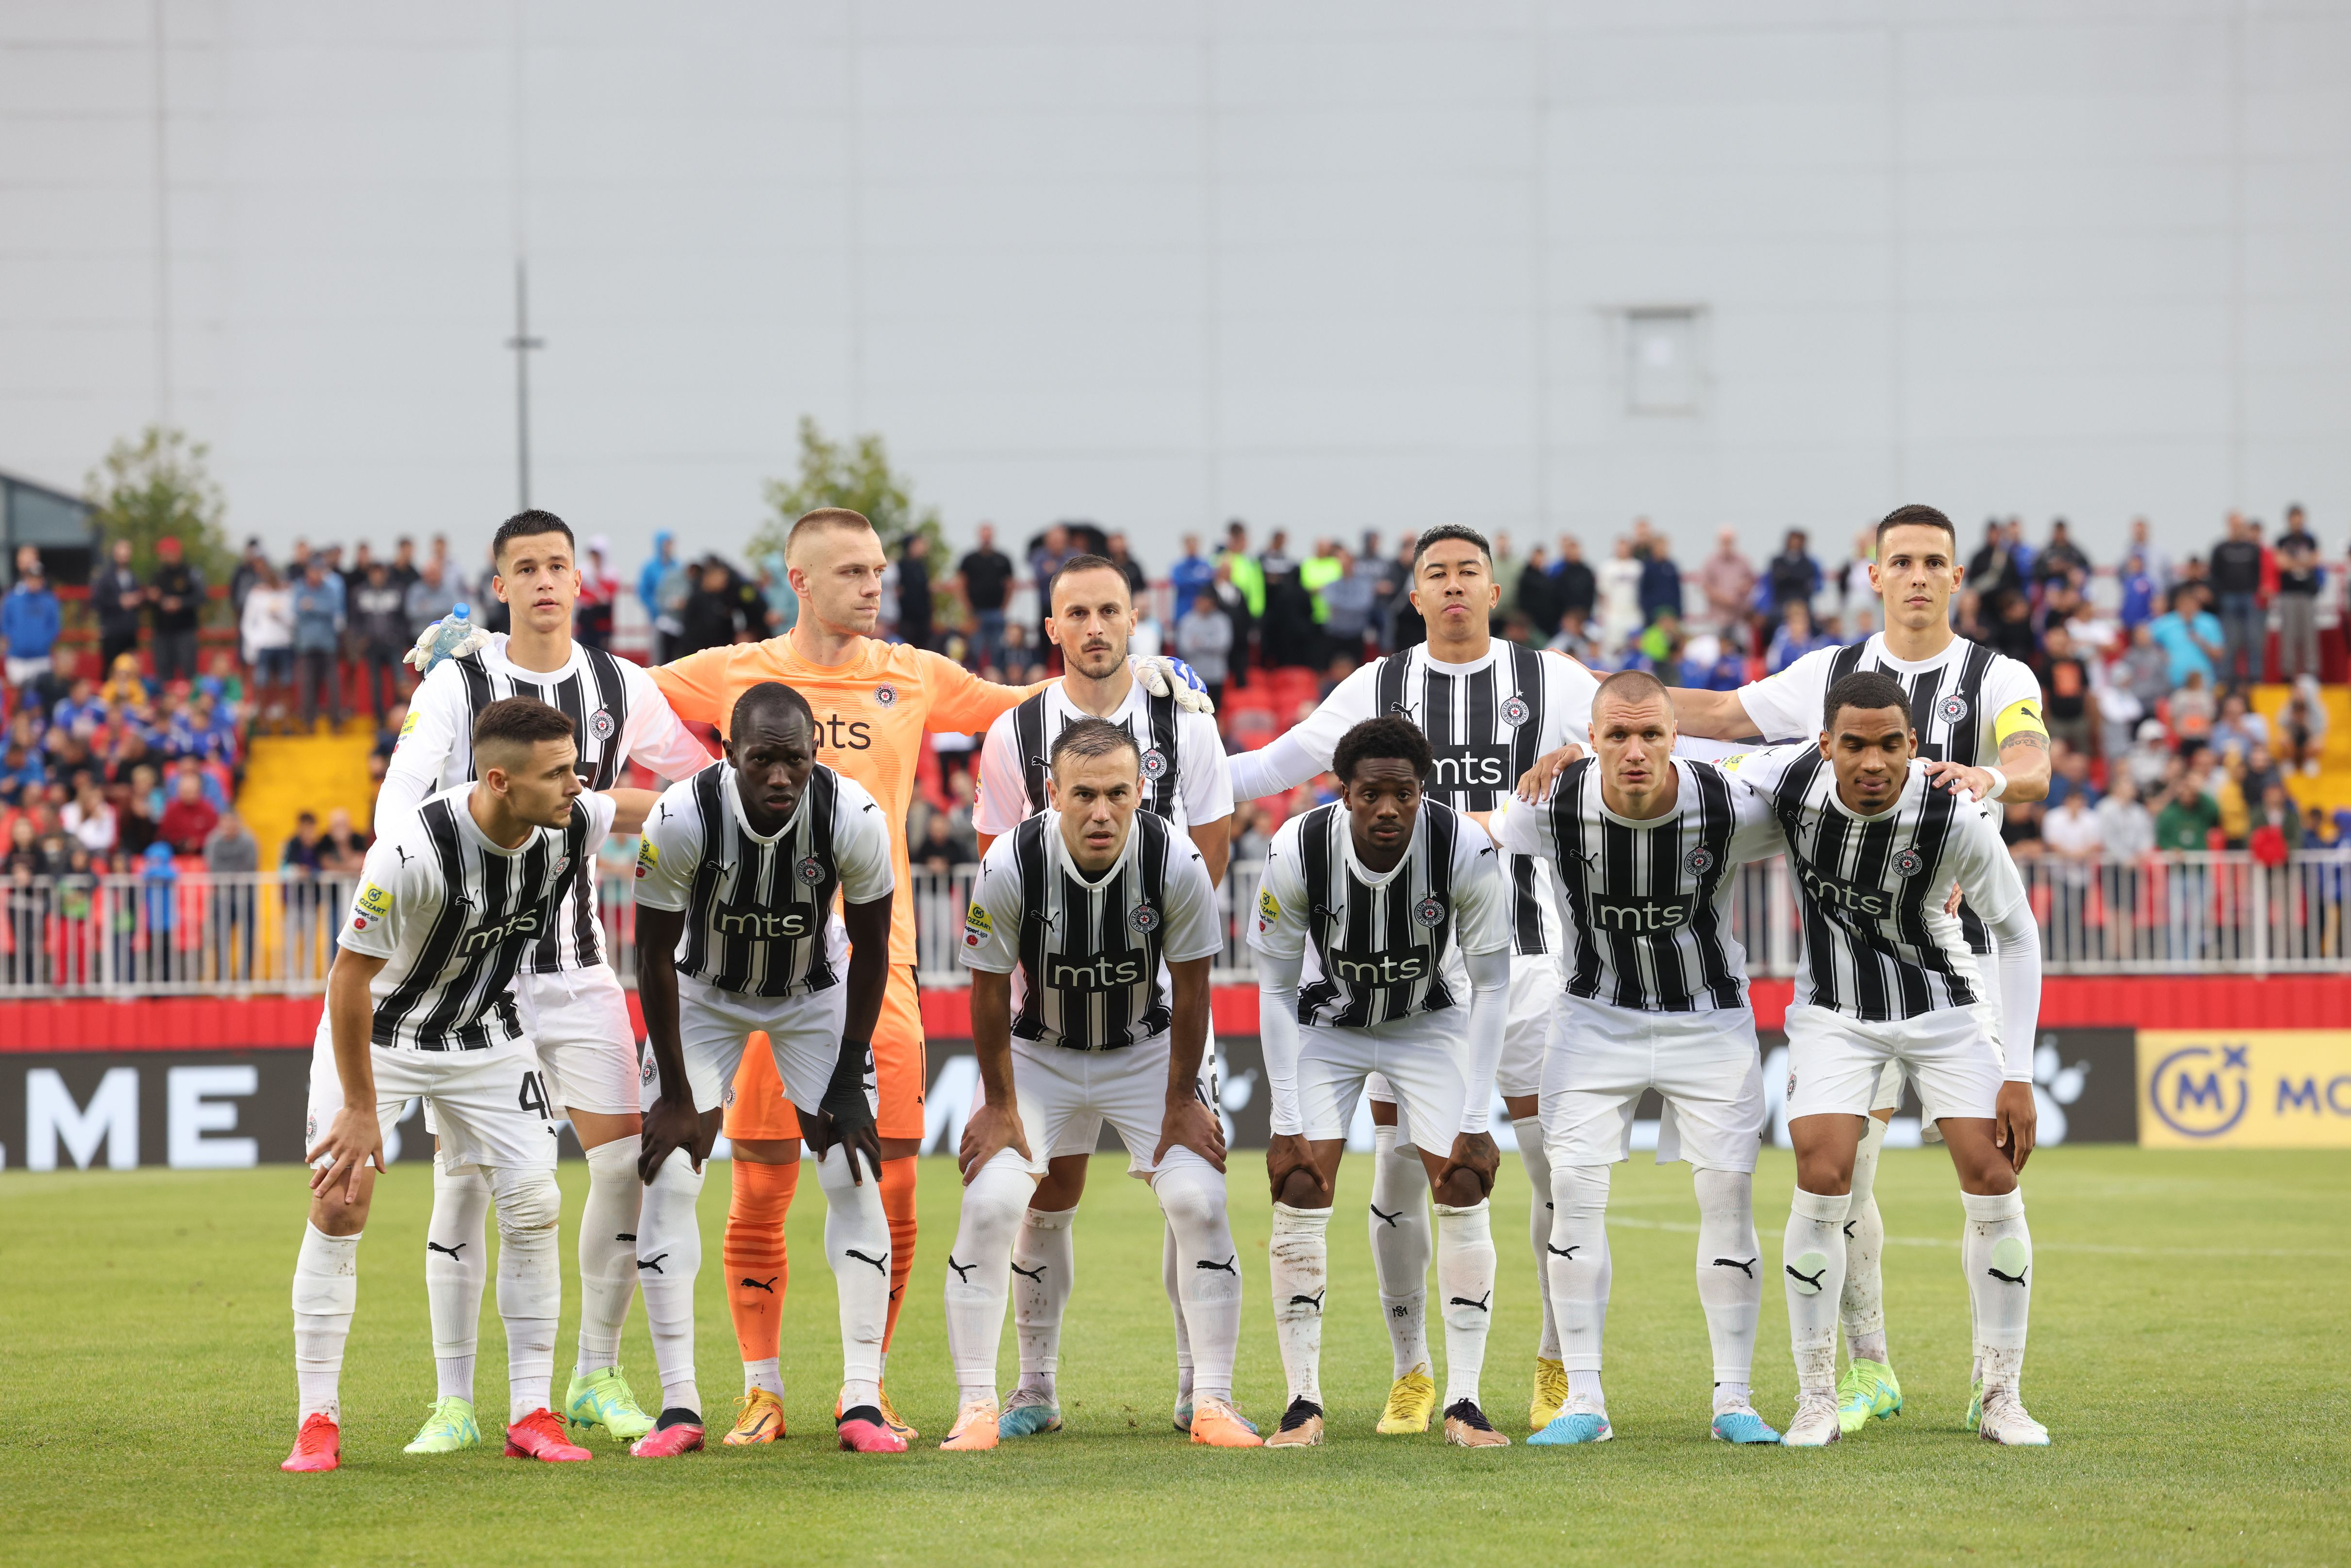 FK Čukarički vs Radnicki Nis 29.07.2023 at Super Liga 2023/24